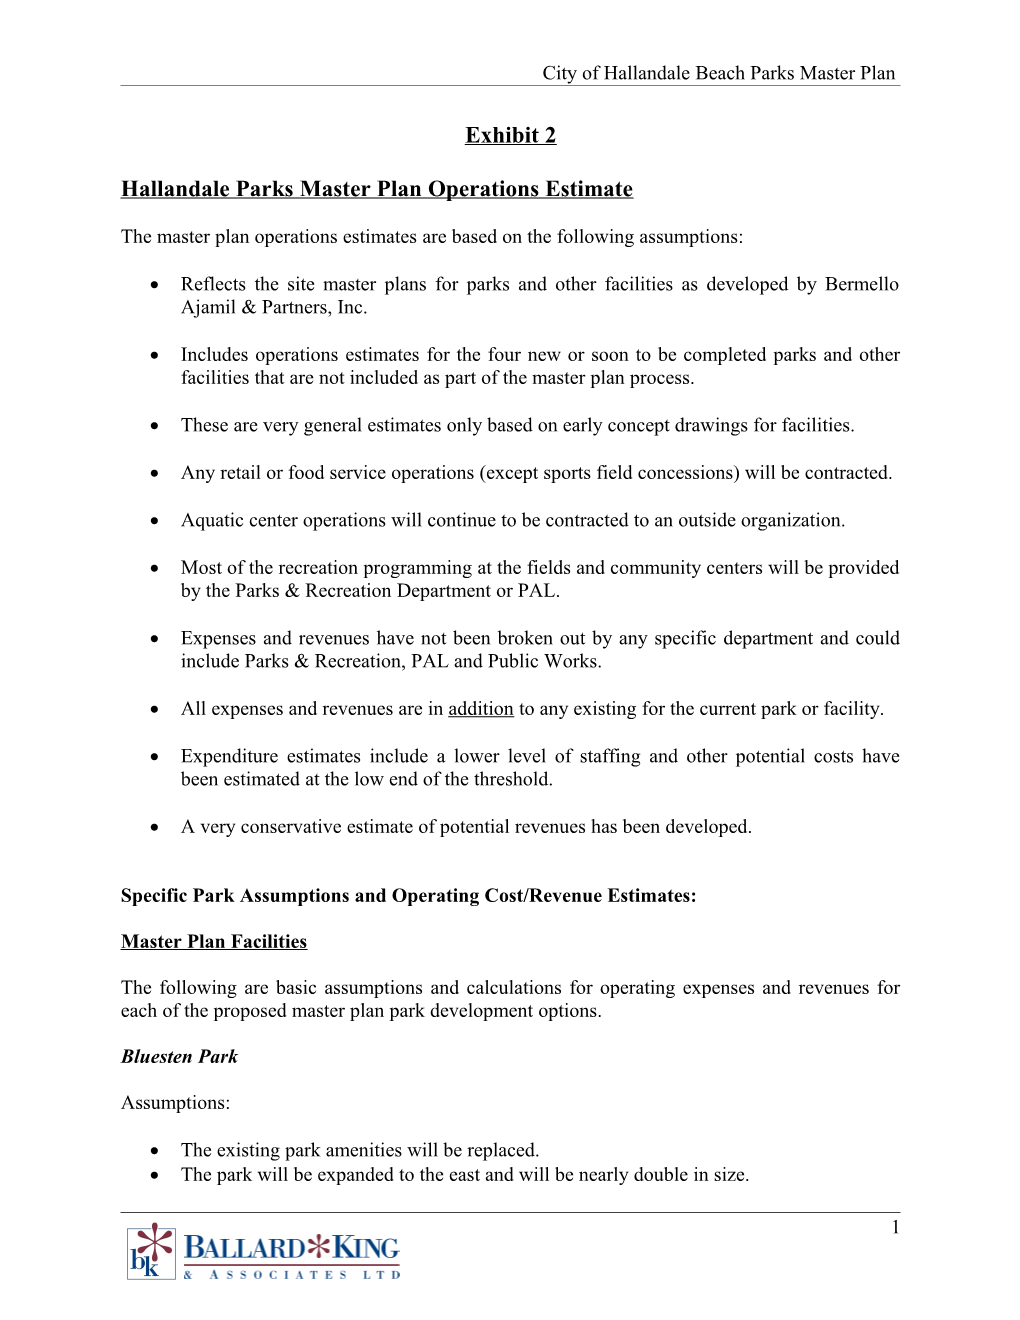 Hallandaleparks Master Plan Operations Estimate